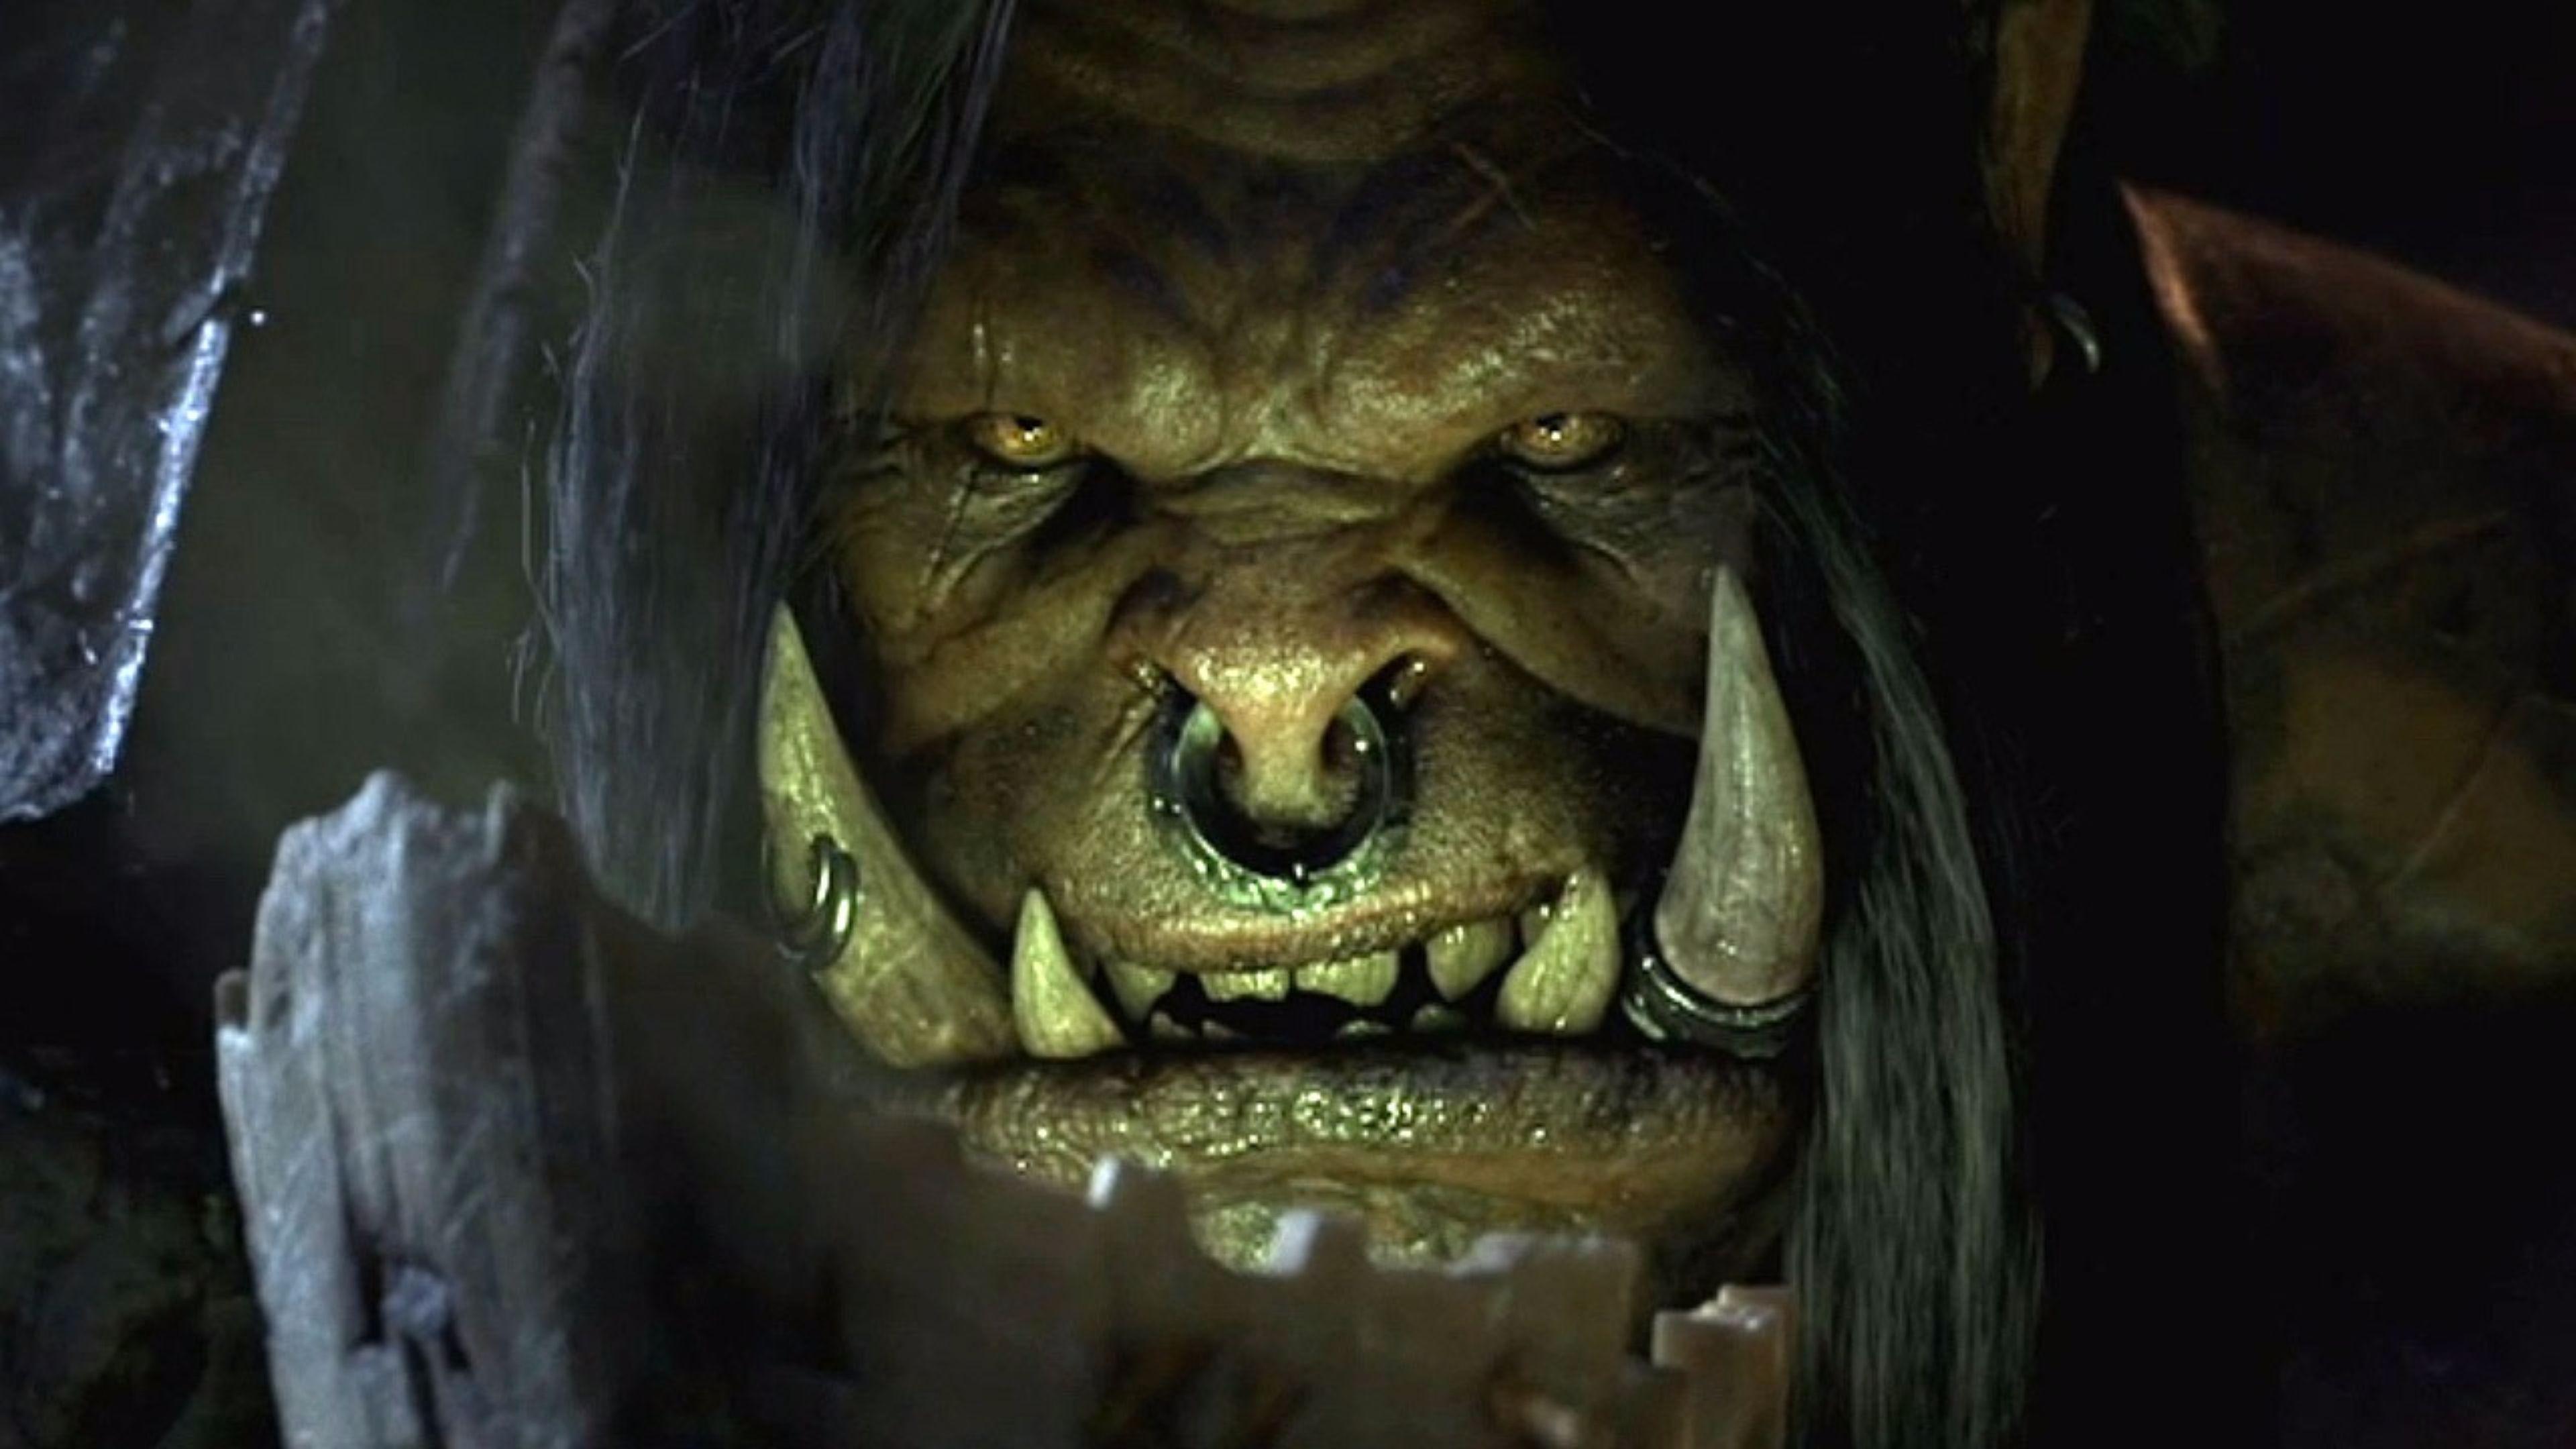 Launch Reveal World of Warcraft Movie 4K Wallpaper. Free 4K Wallpaper